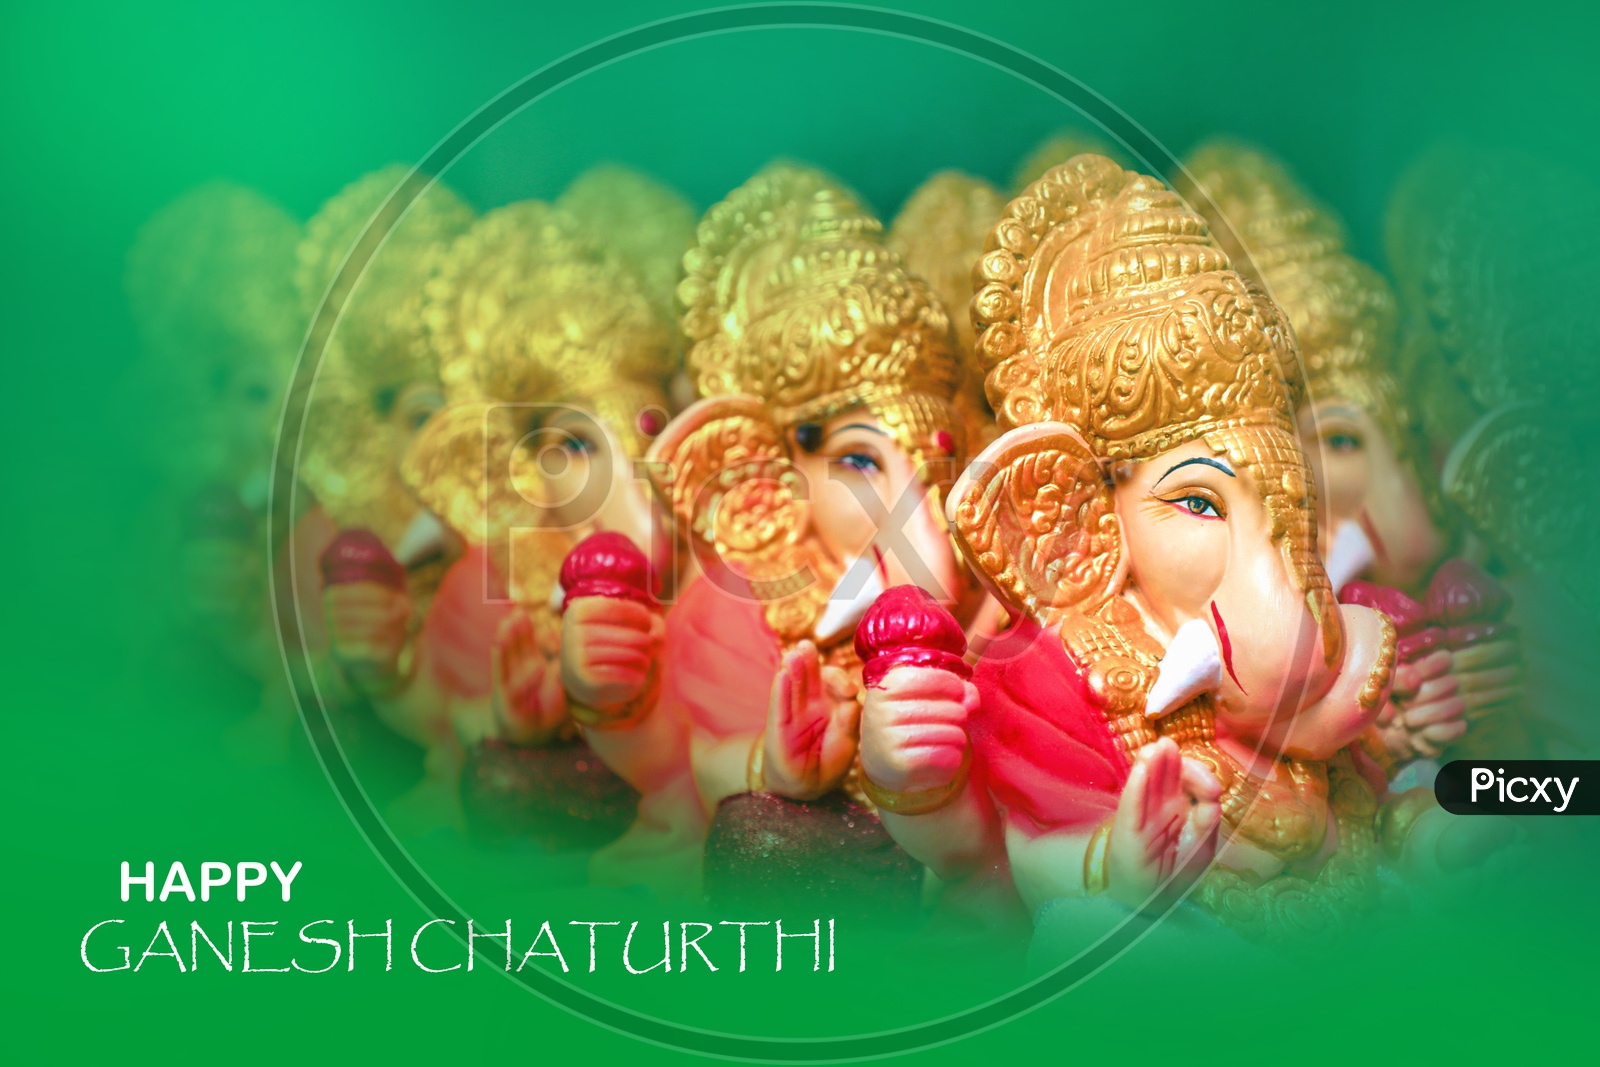 Happy Ganesh Chaturthi Poster with Lord Ganesh Idol